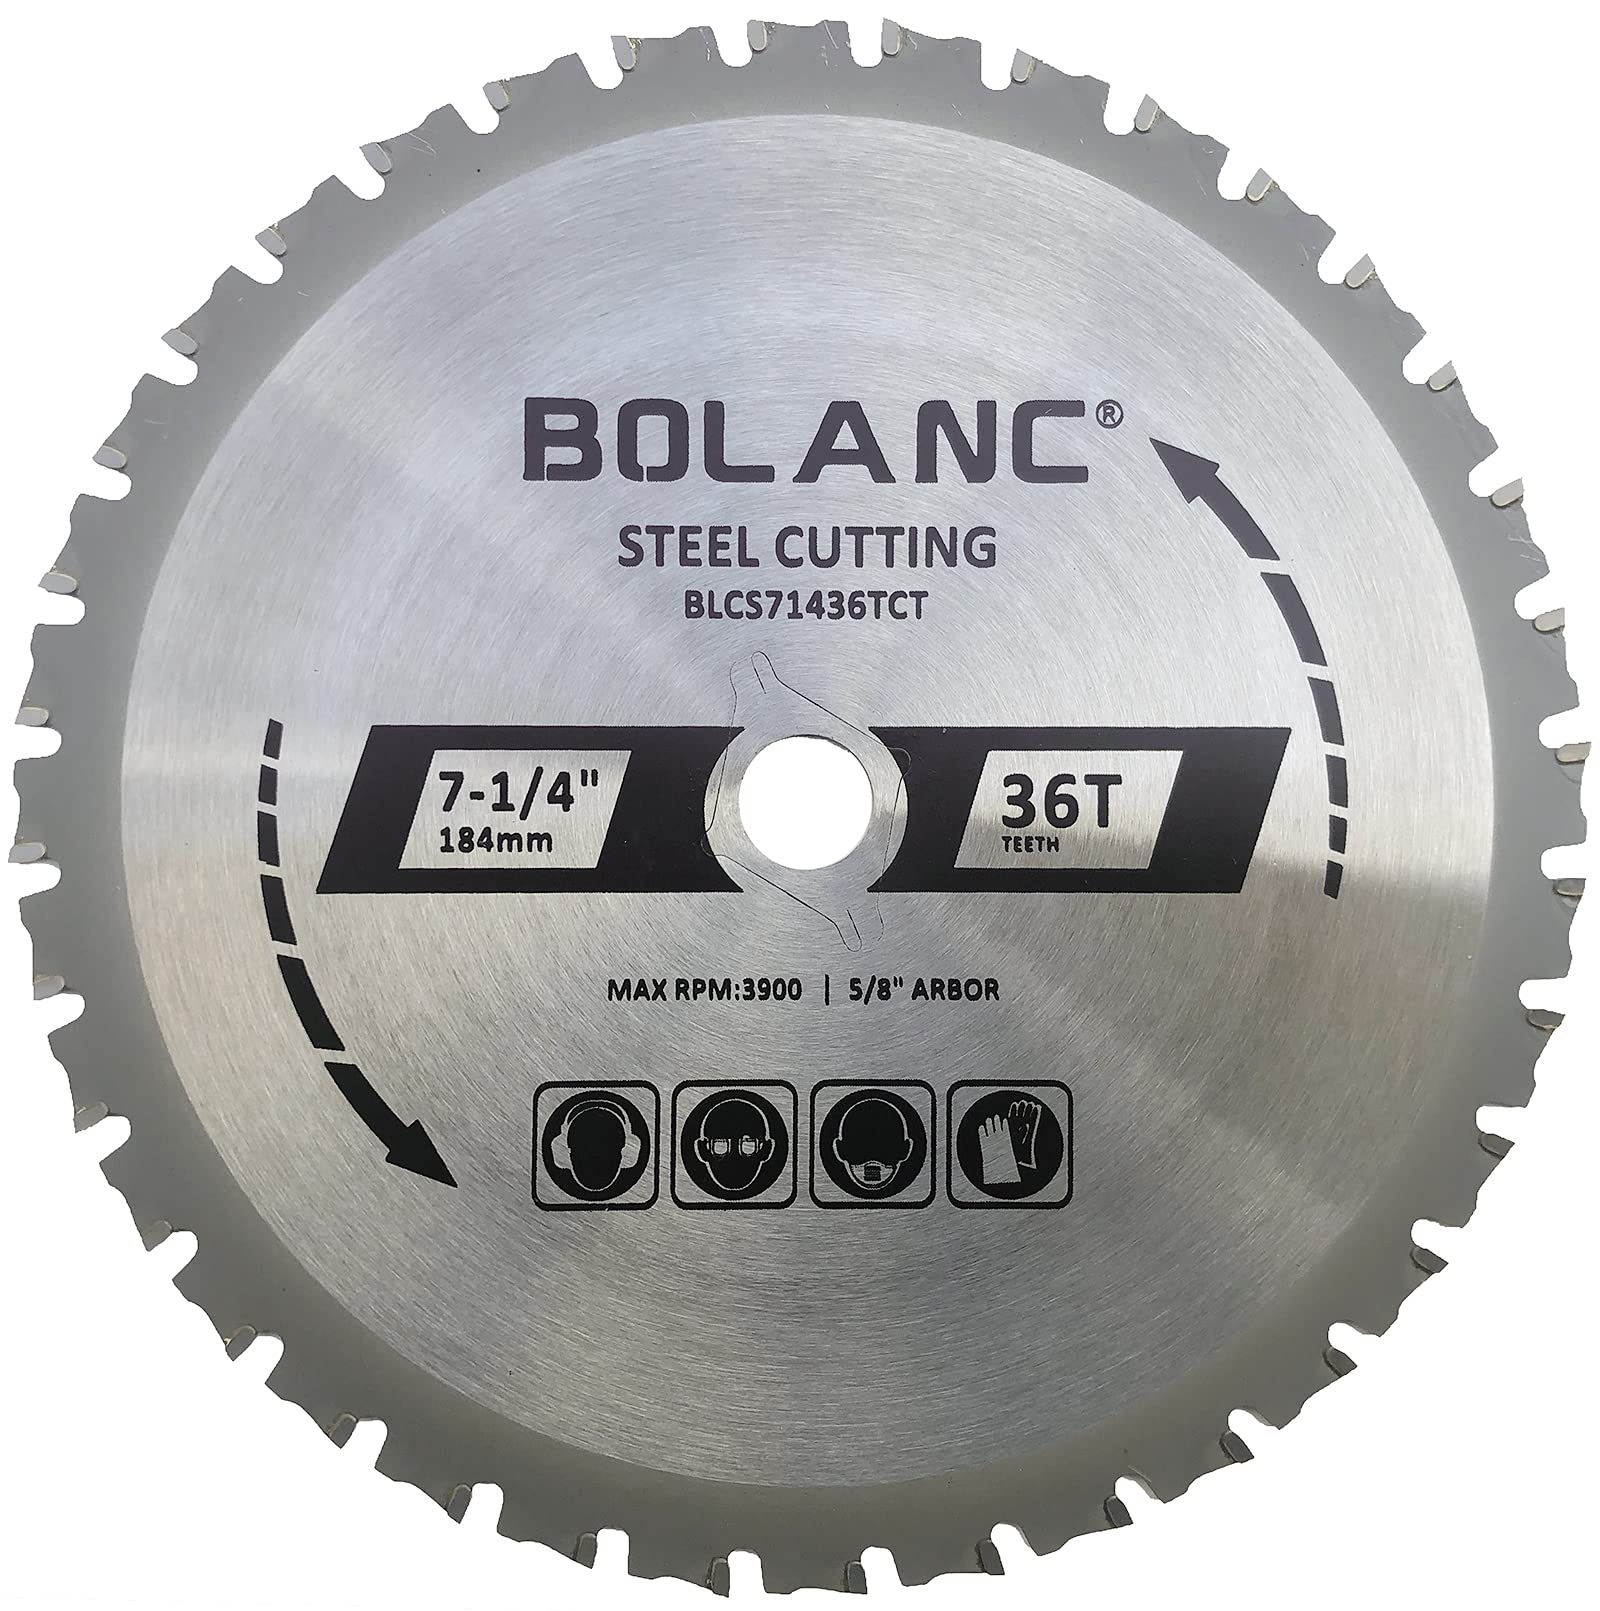 Mua BOLANC Metal Ferrous Steel Cutting Circular Saw Blade 7-1/4 Inch 36  Tooth with 5/8 Inch Arbor trên Amazon Mỹ chính hãng 2023 Giaonhan247